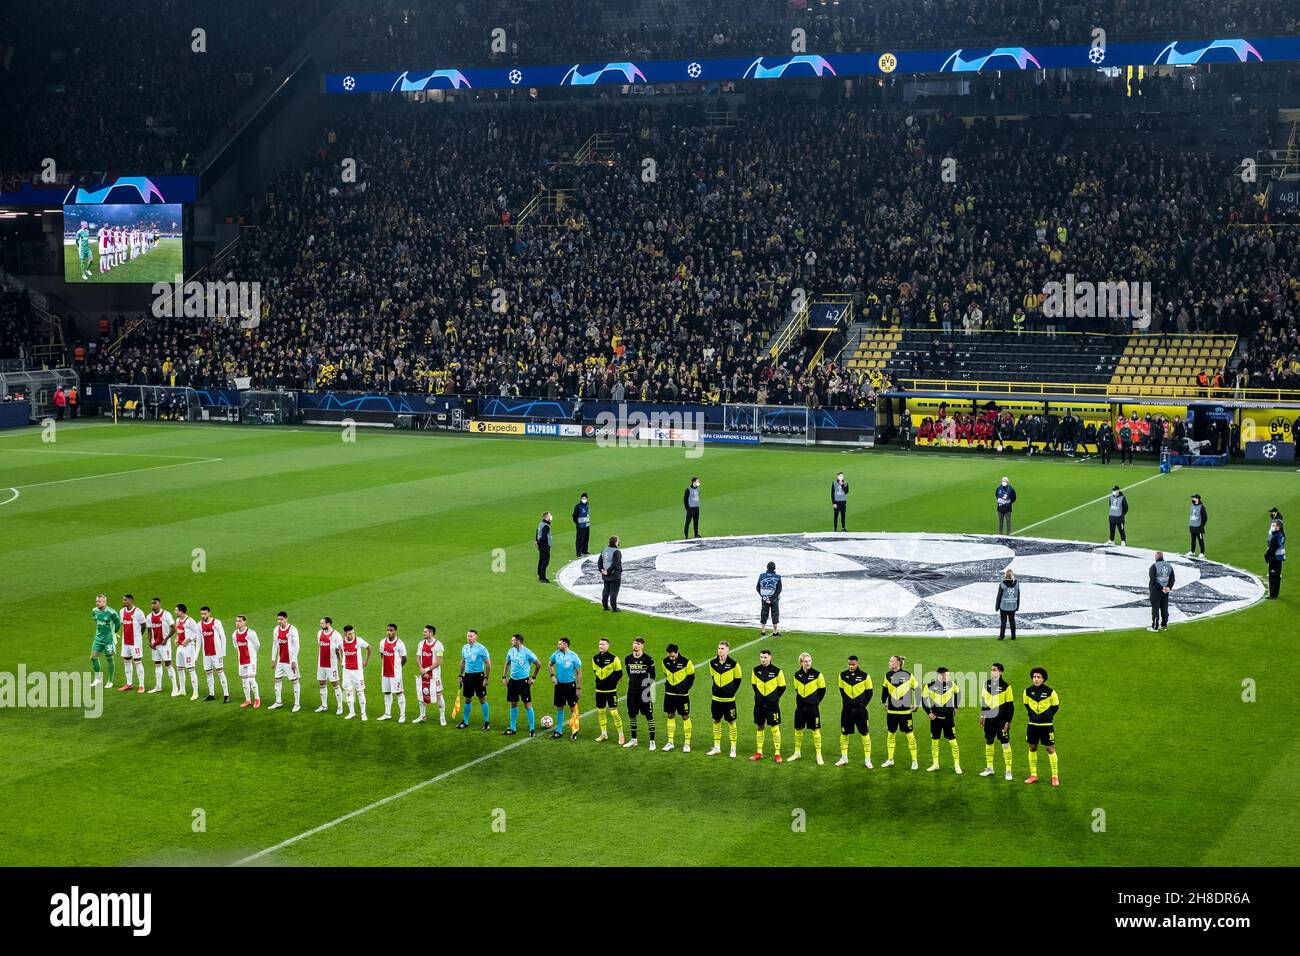 Borussia dortmund ajax amsterdam hi-res stock photography and images - Alamy